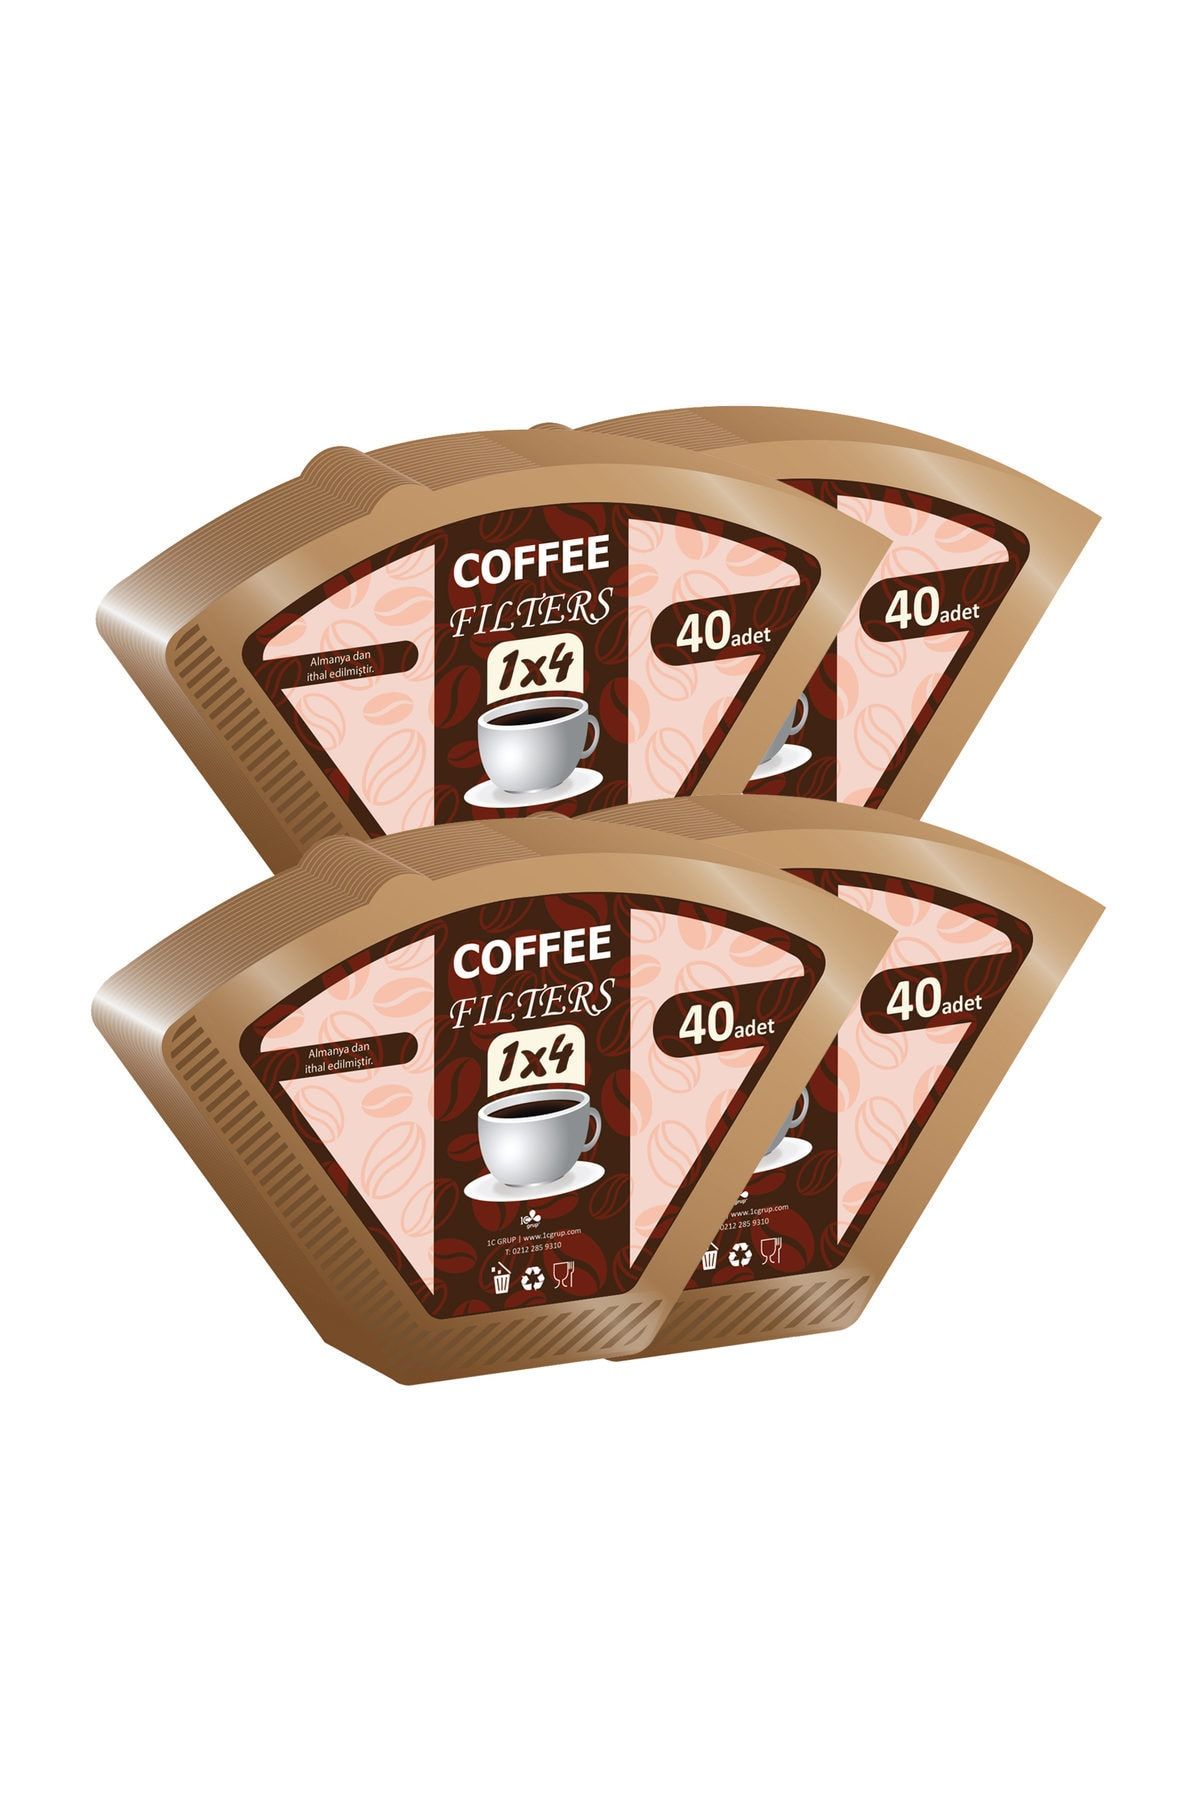 Universal Coffee Filters Kahve Filtre Kağıdı 1x4 40'lı 4 Paket 160 Adet Brown